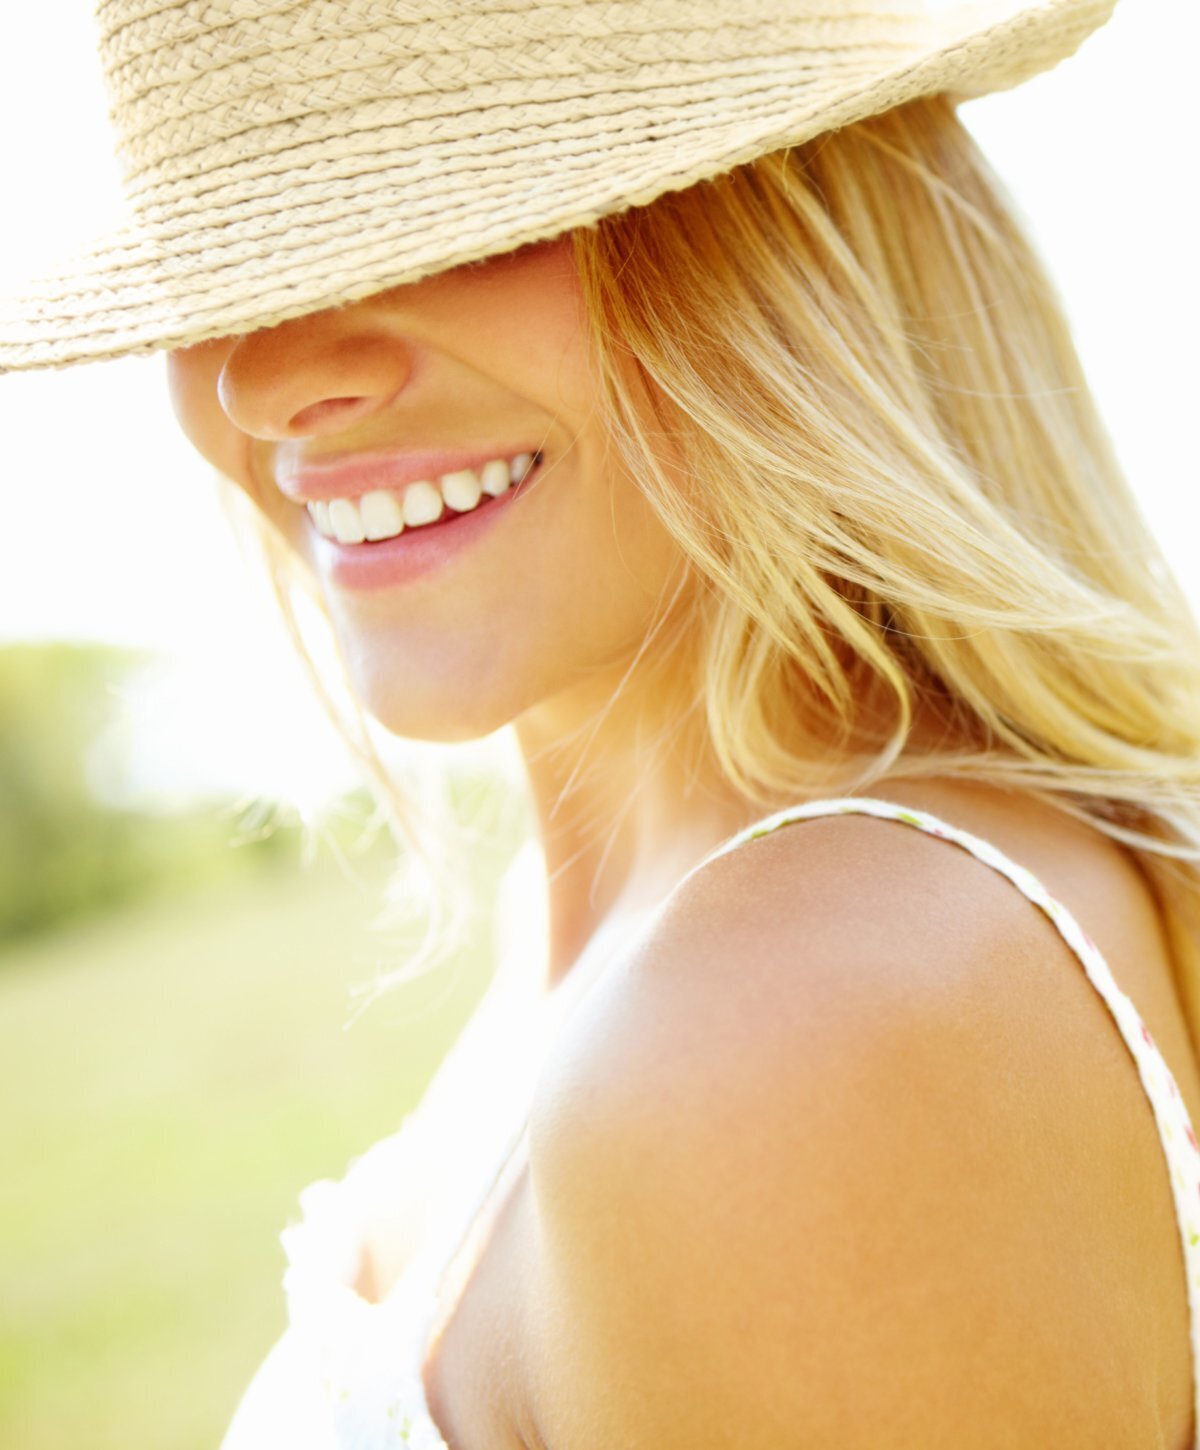 blonde Grand Rapids BOTOX patient model smiling in a sun hat